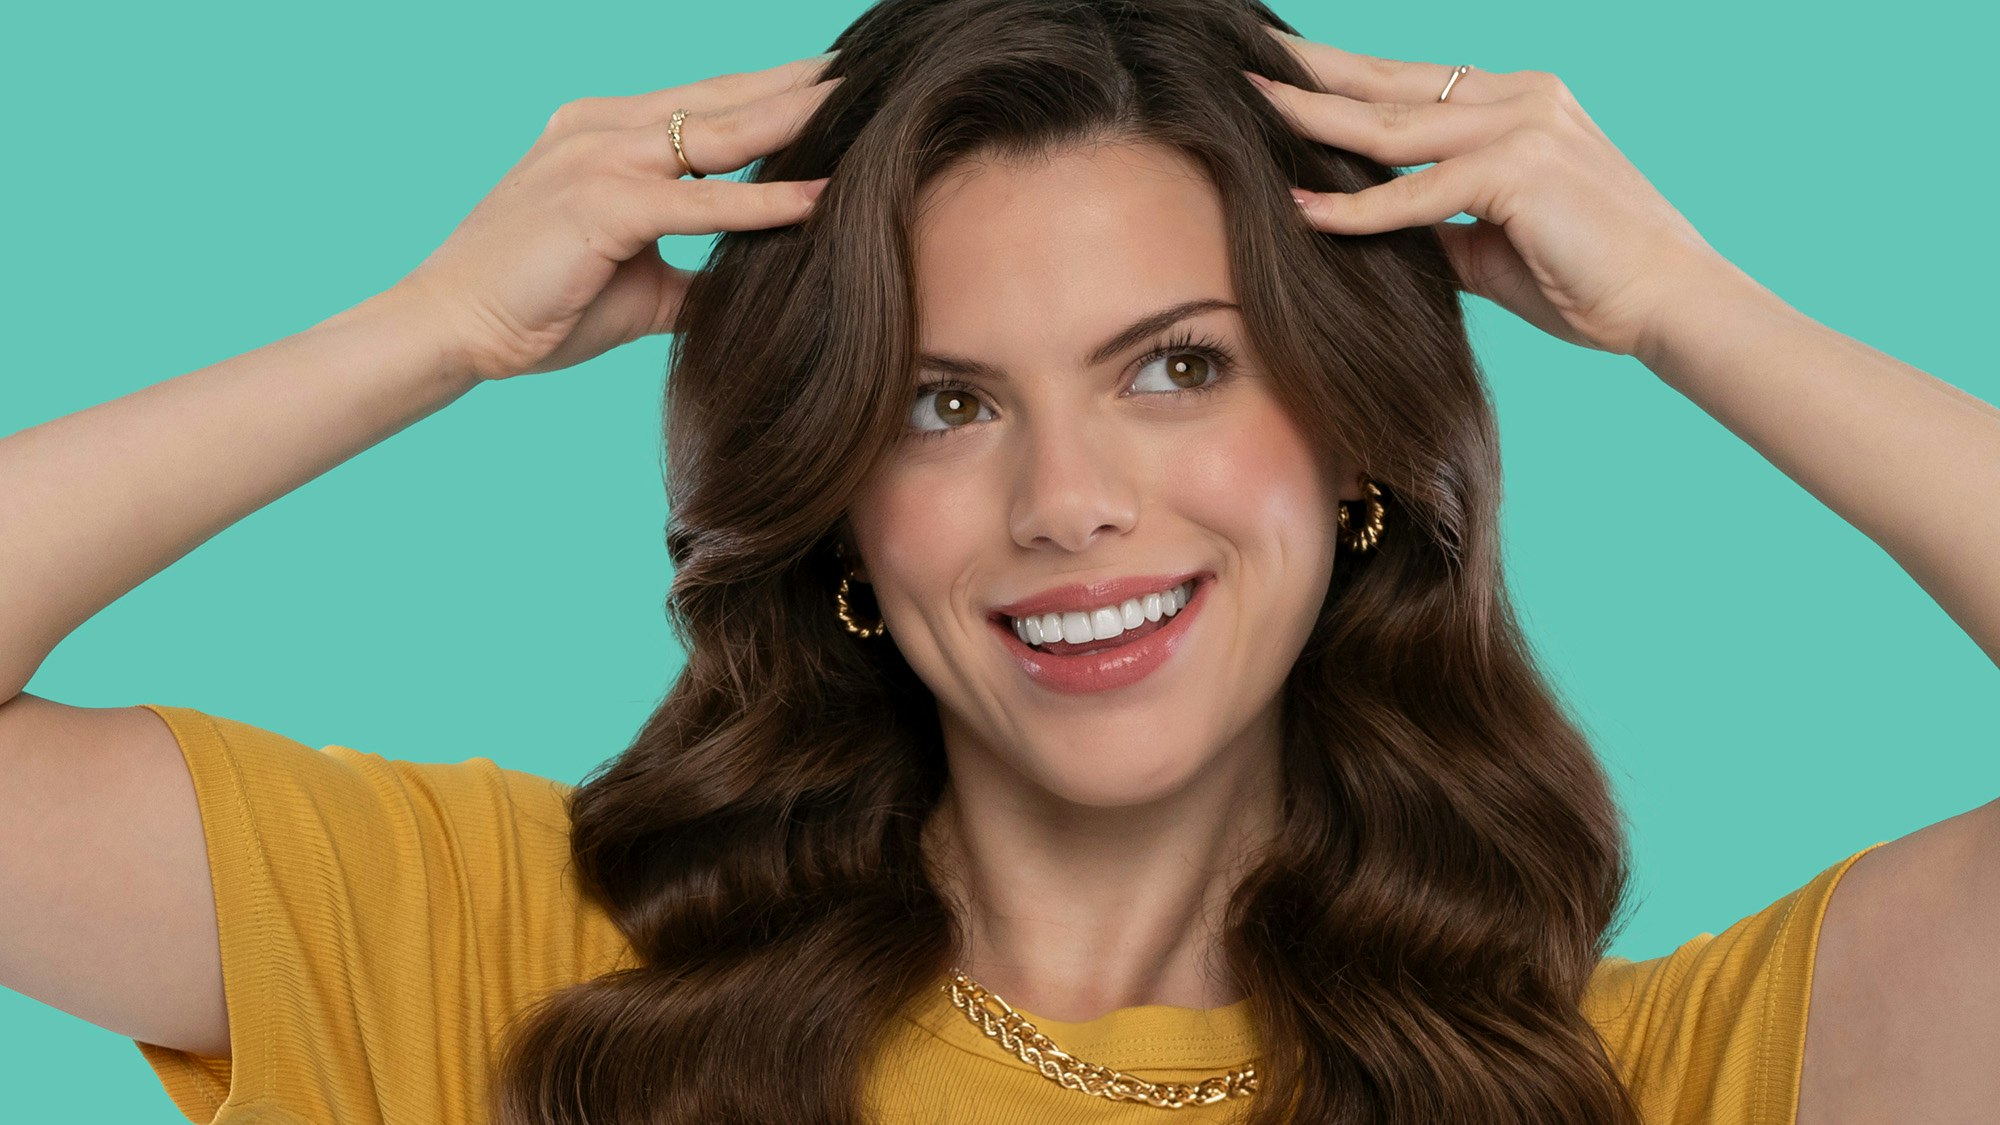 Guide: Sådan styler du dit hår med en tørshampoo